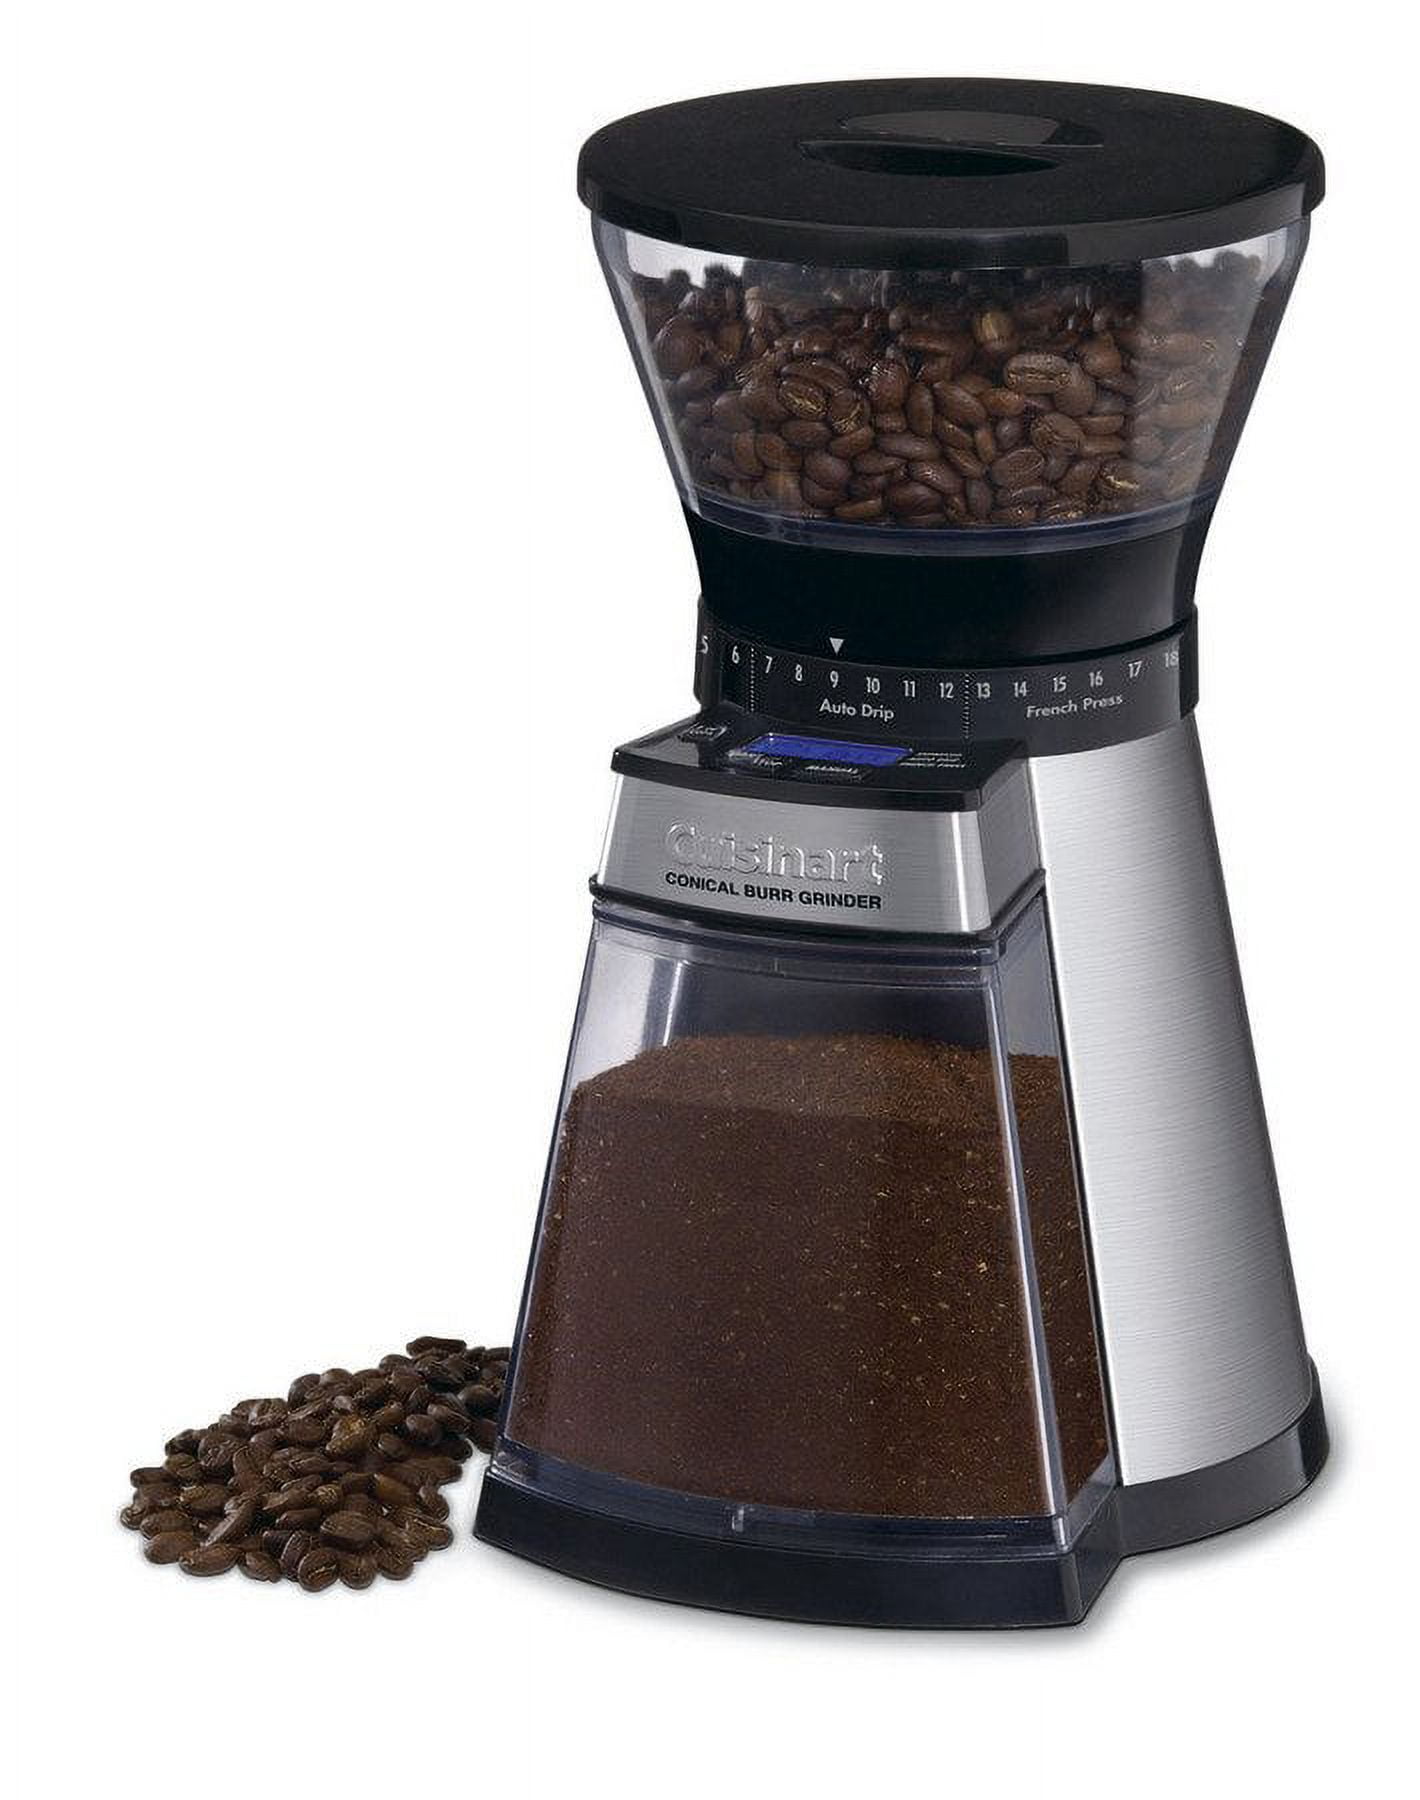 Cuisinart coffee bean grinder the best - household items - by owner -  housewares sale - craigslist